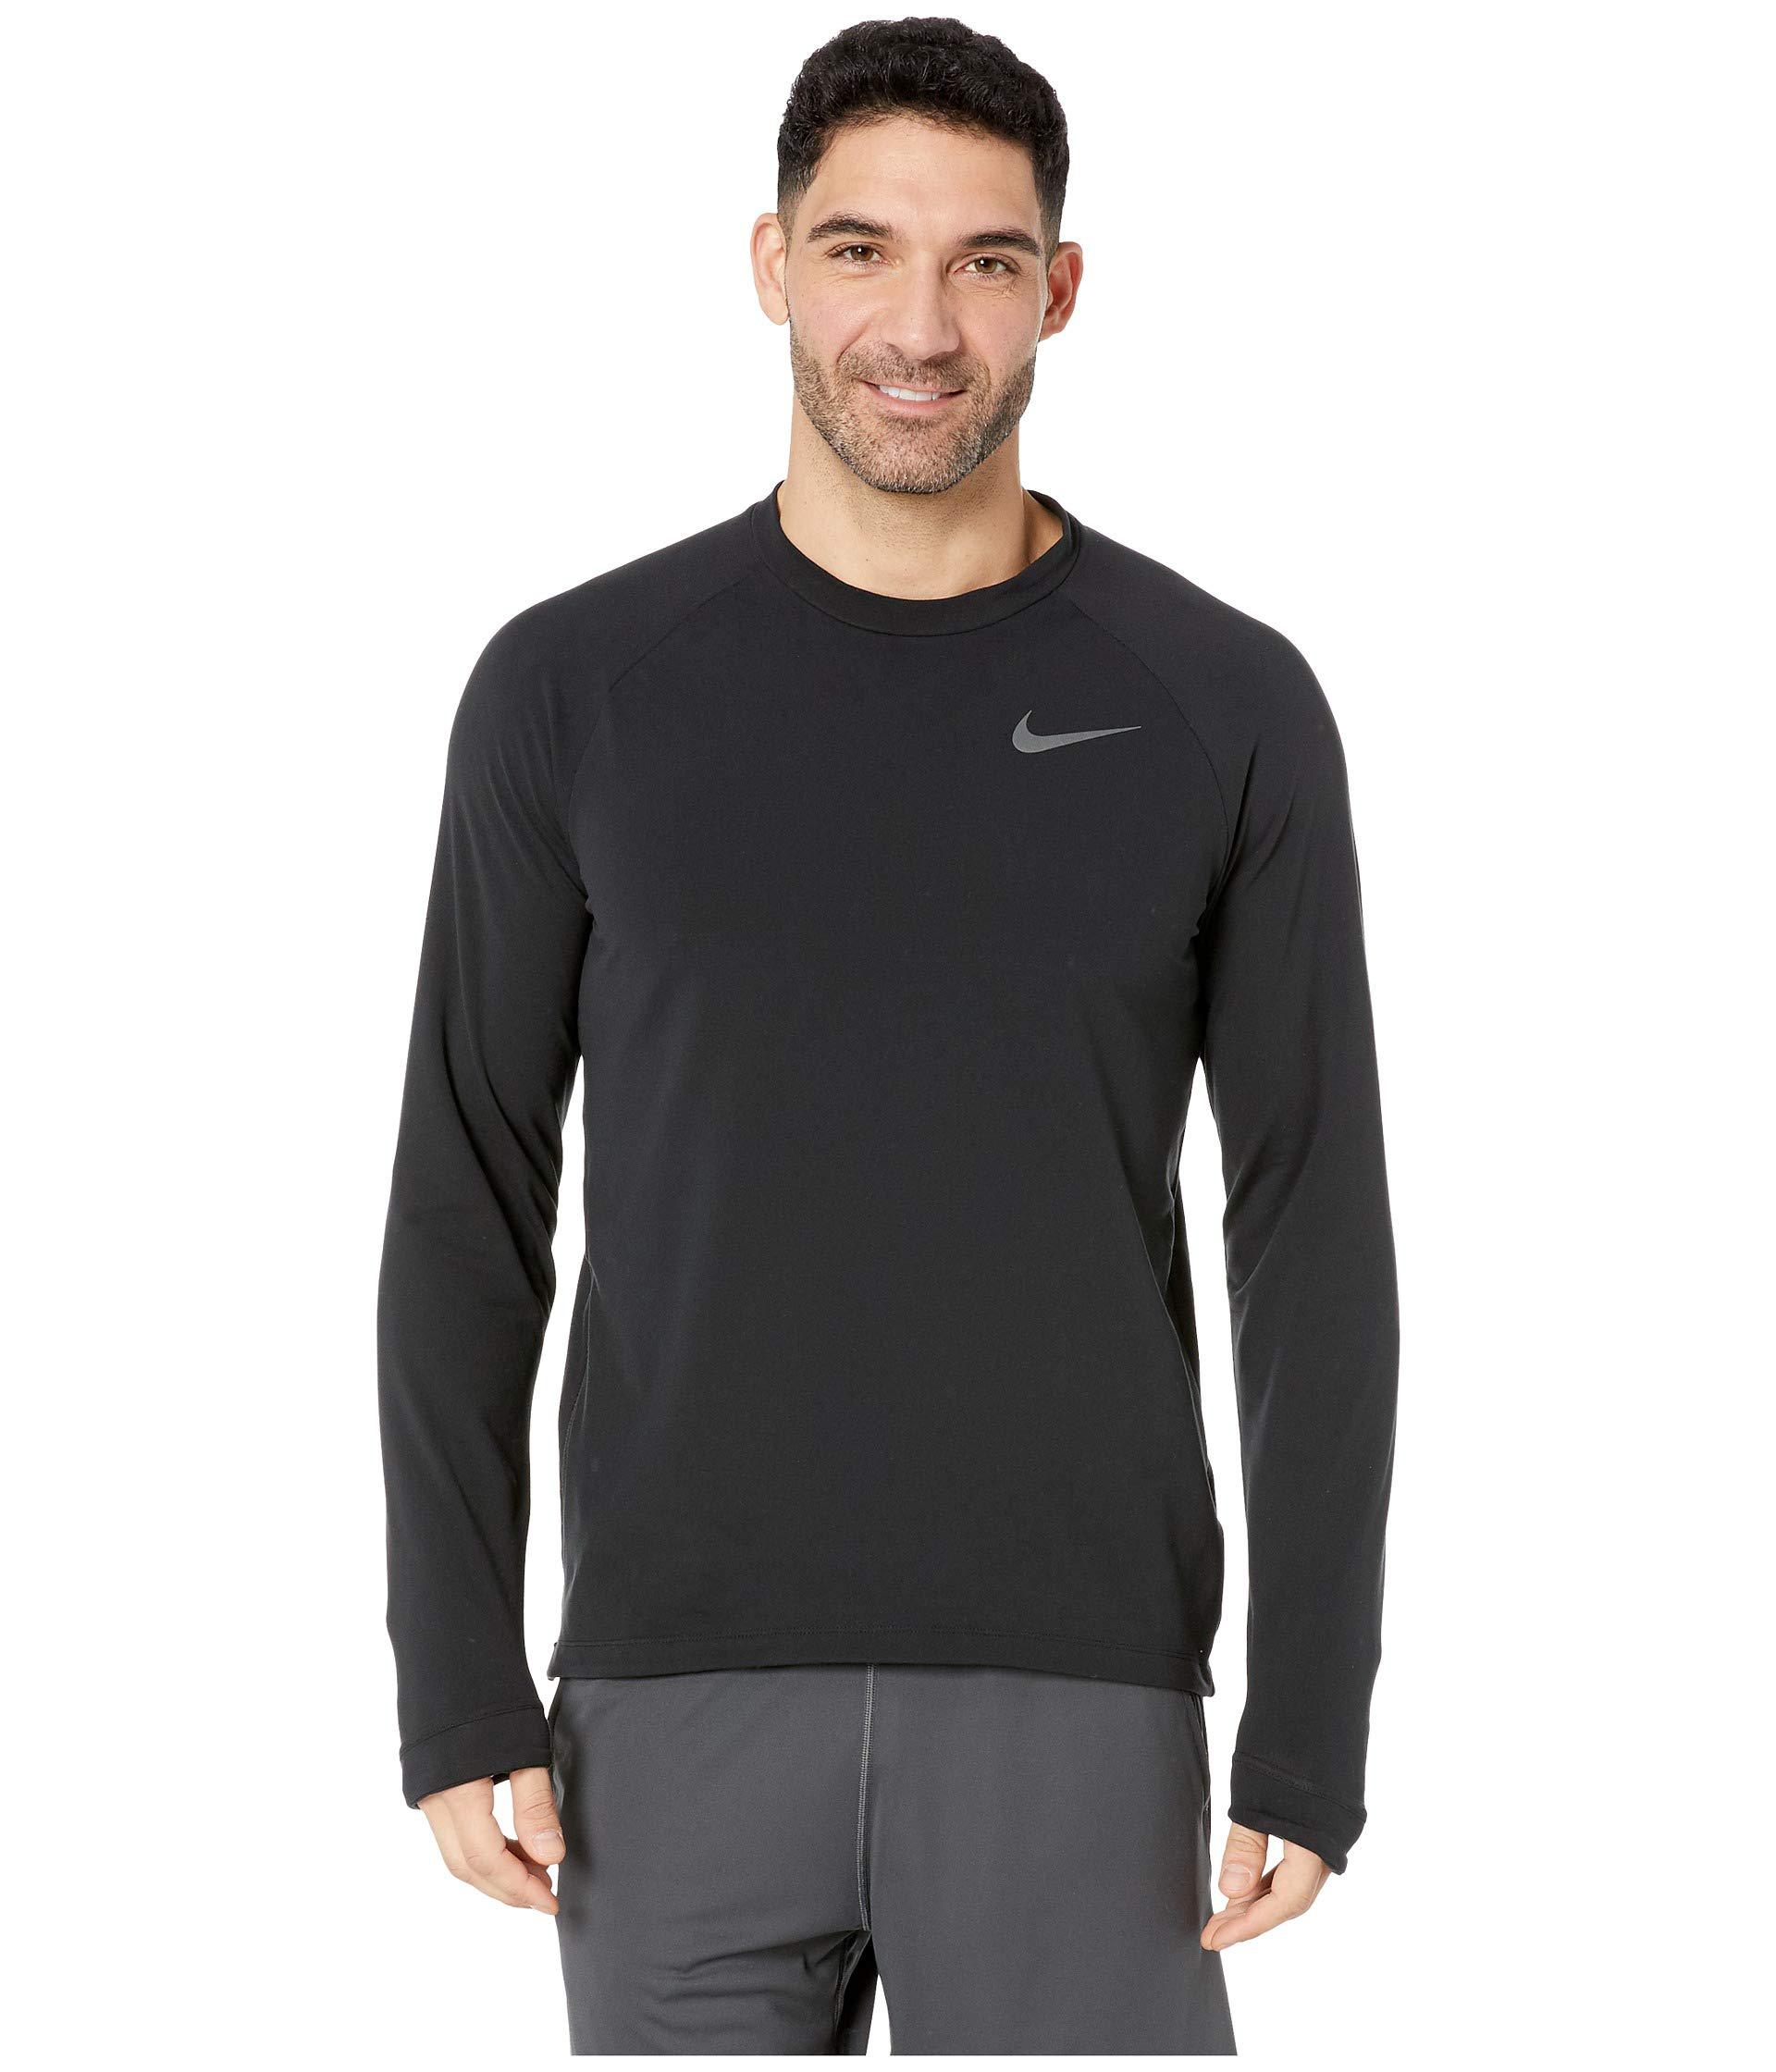 Download Lyst - Nike Thermal Top Mock (black) Men's Clothing in ...